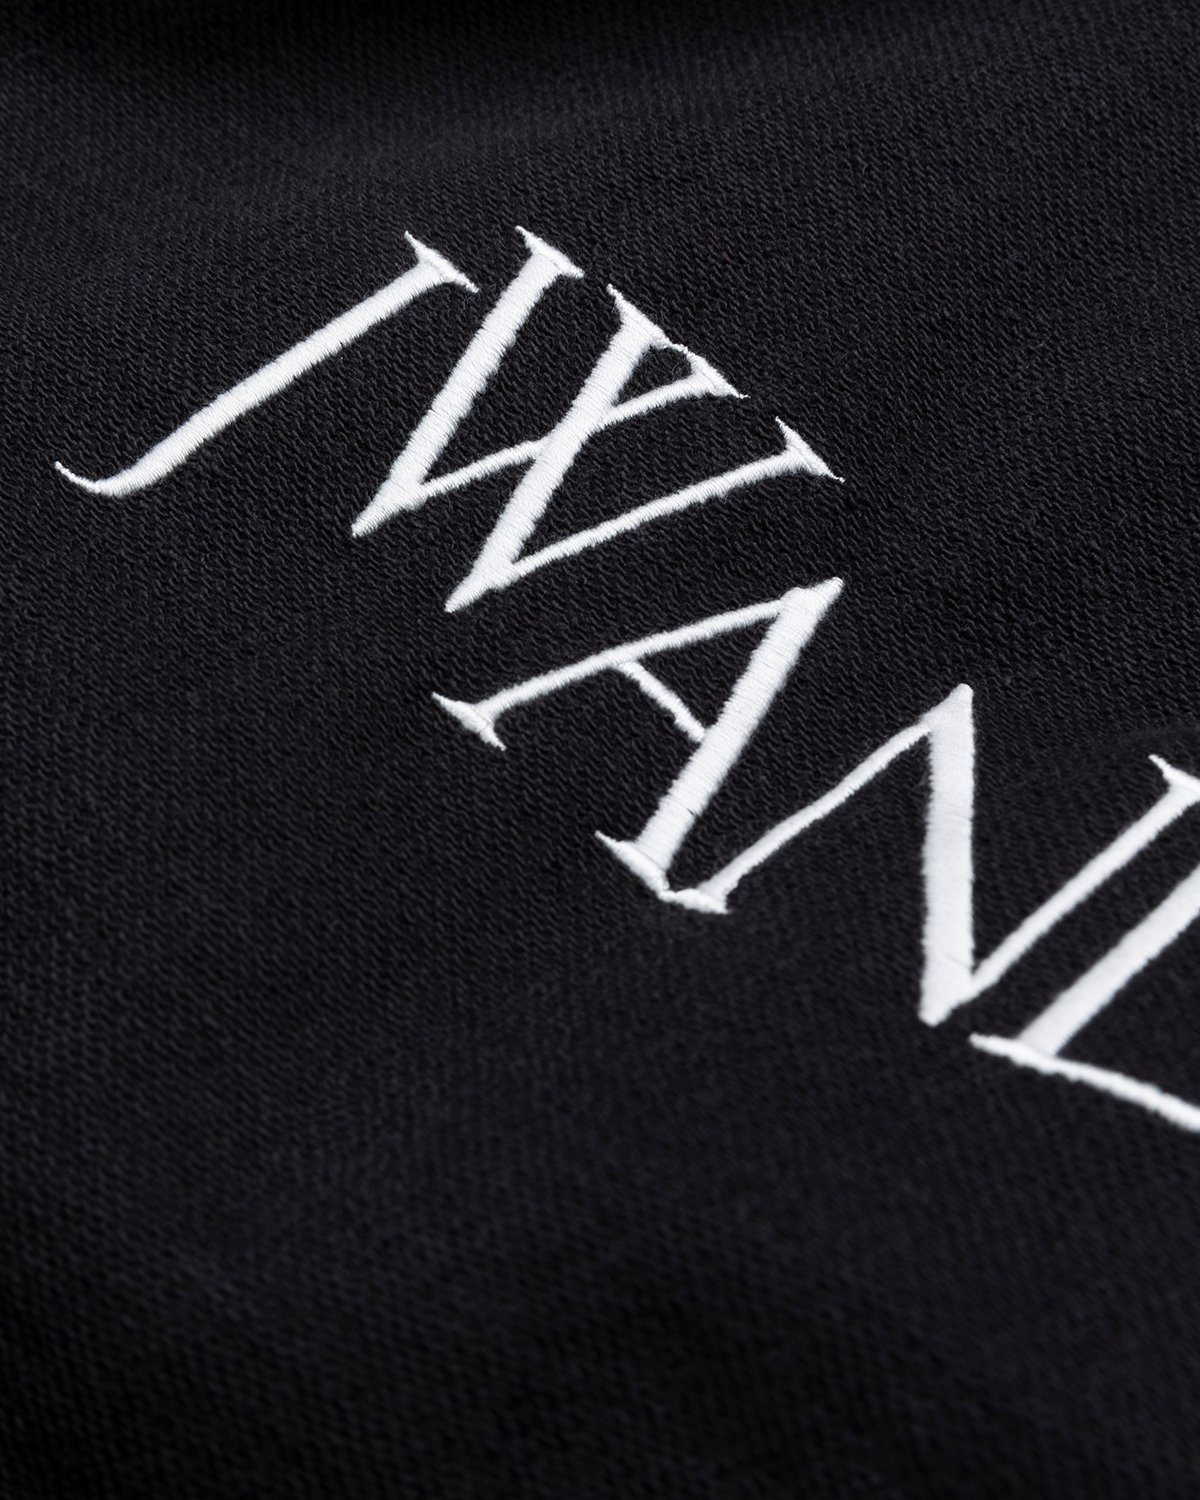 J.W. Anderson - Inside Out Contrast Sweatshirt Black - Clothing - Black - Image 6